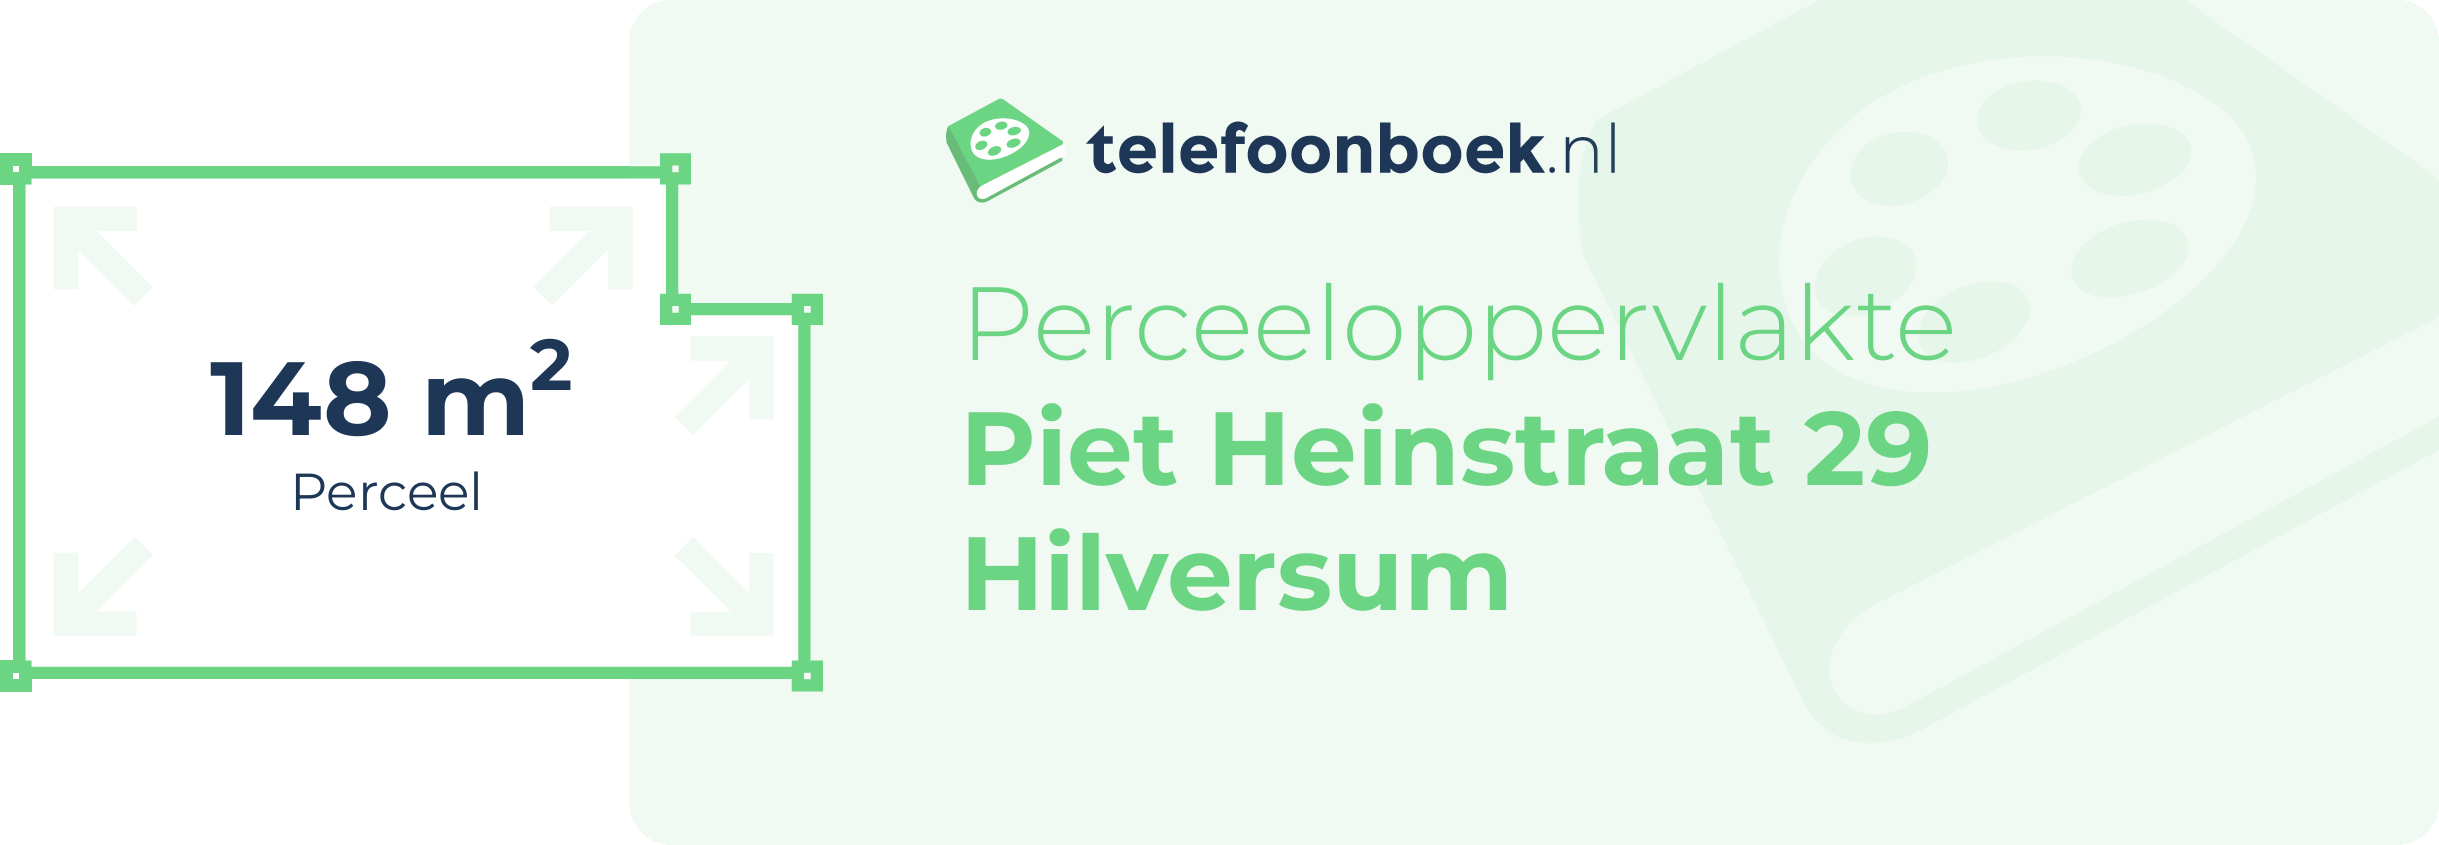 Perceeloppervlakte Piet Heinstraat 29 Hilversum